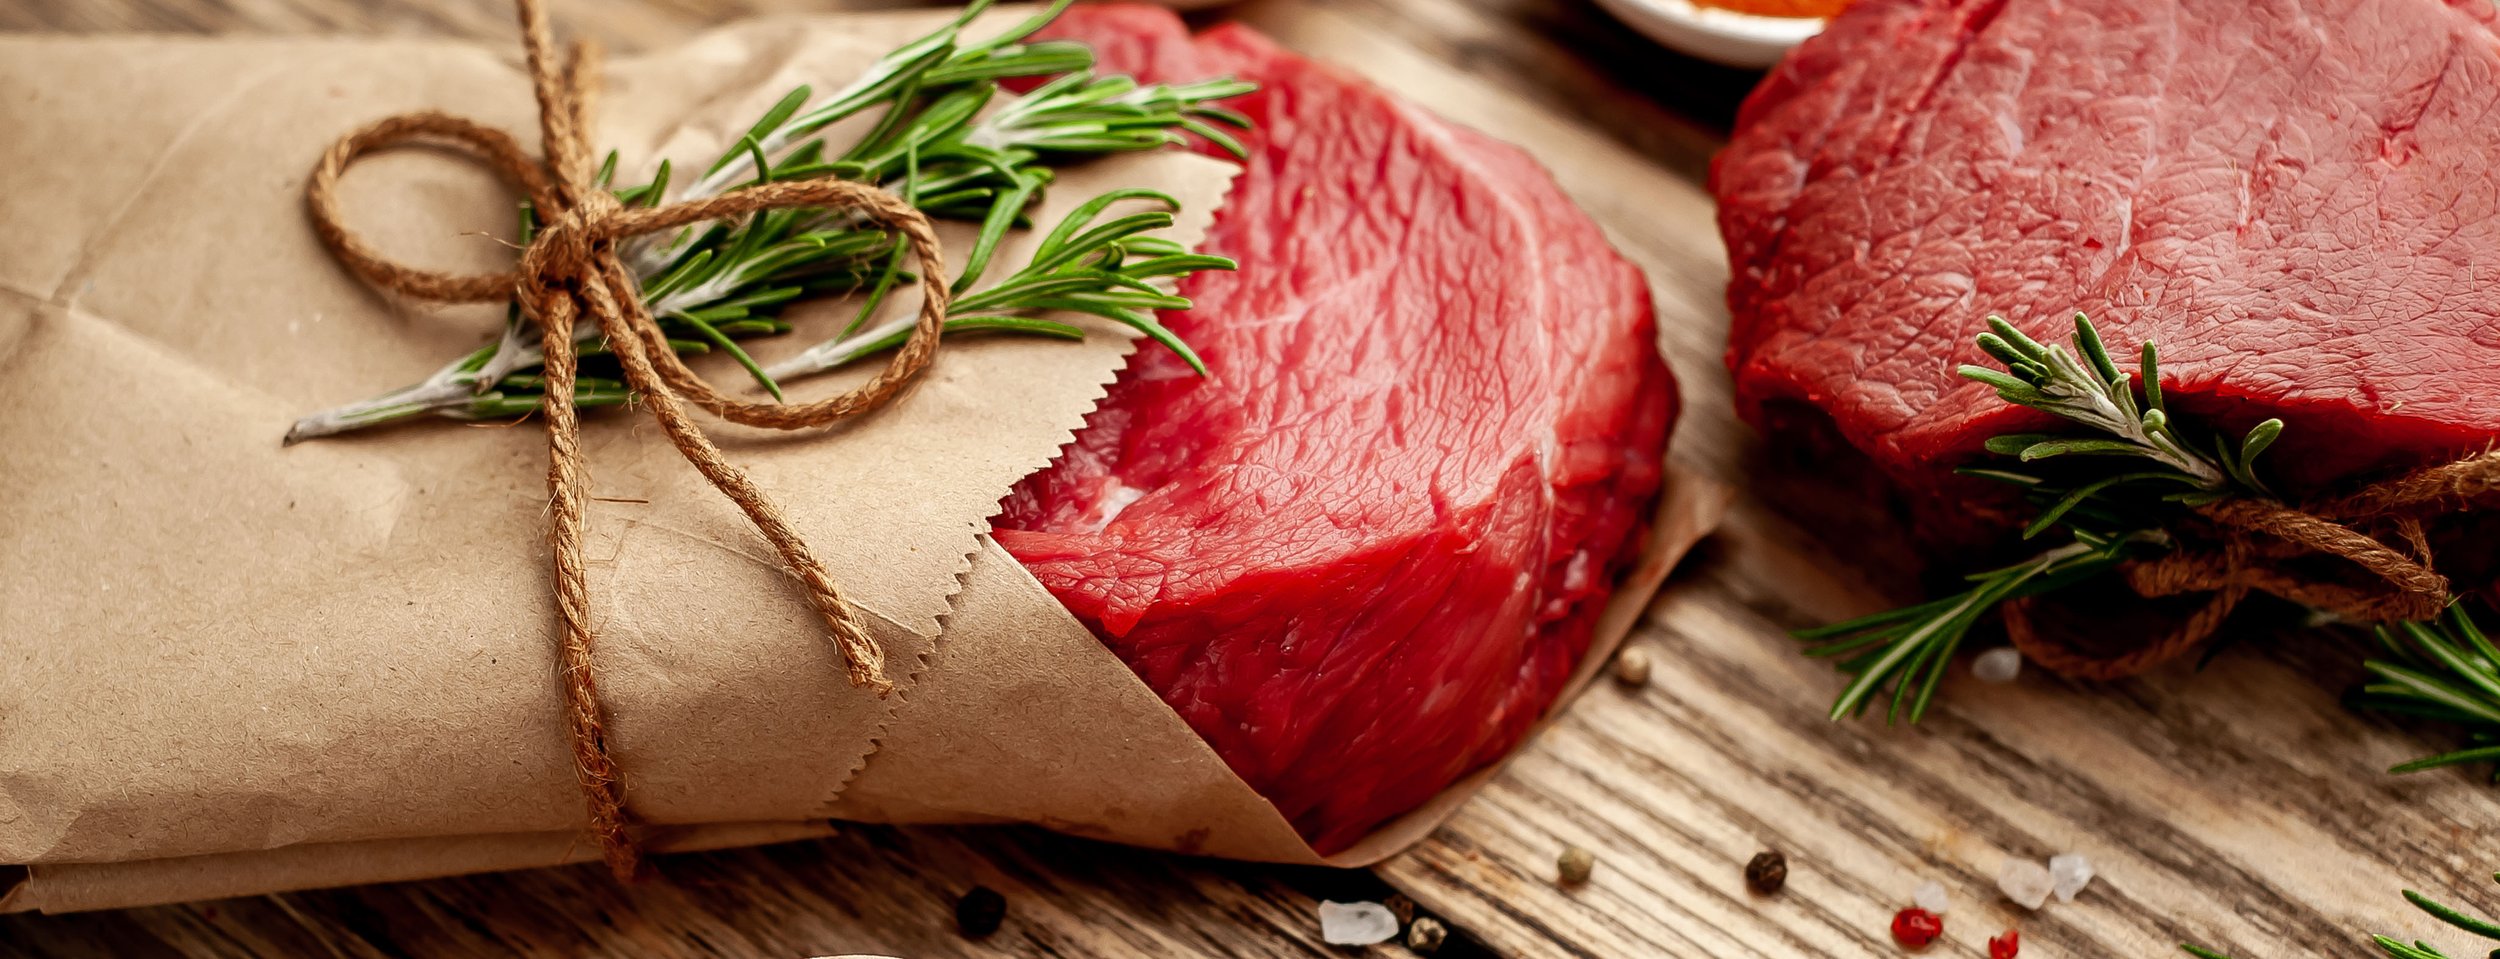 unclegsfarm_beef_iowa_angusx_butcher_wrapped_steaks.jpeg